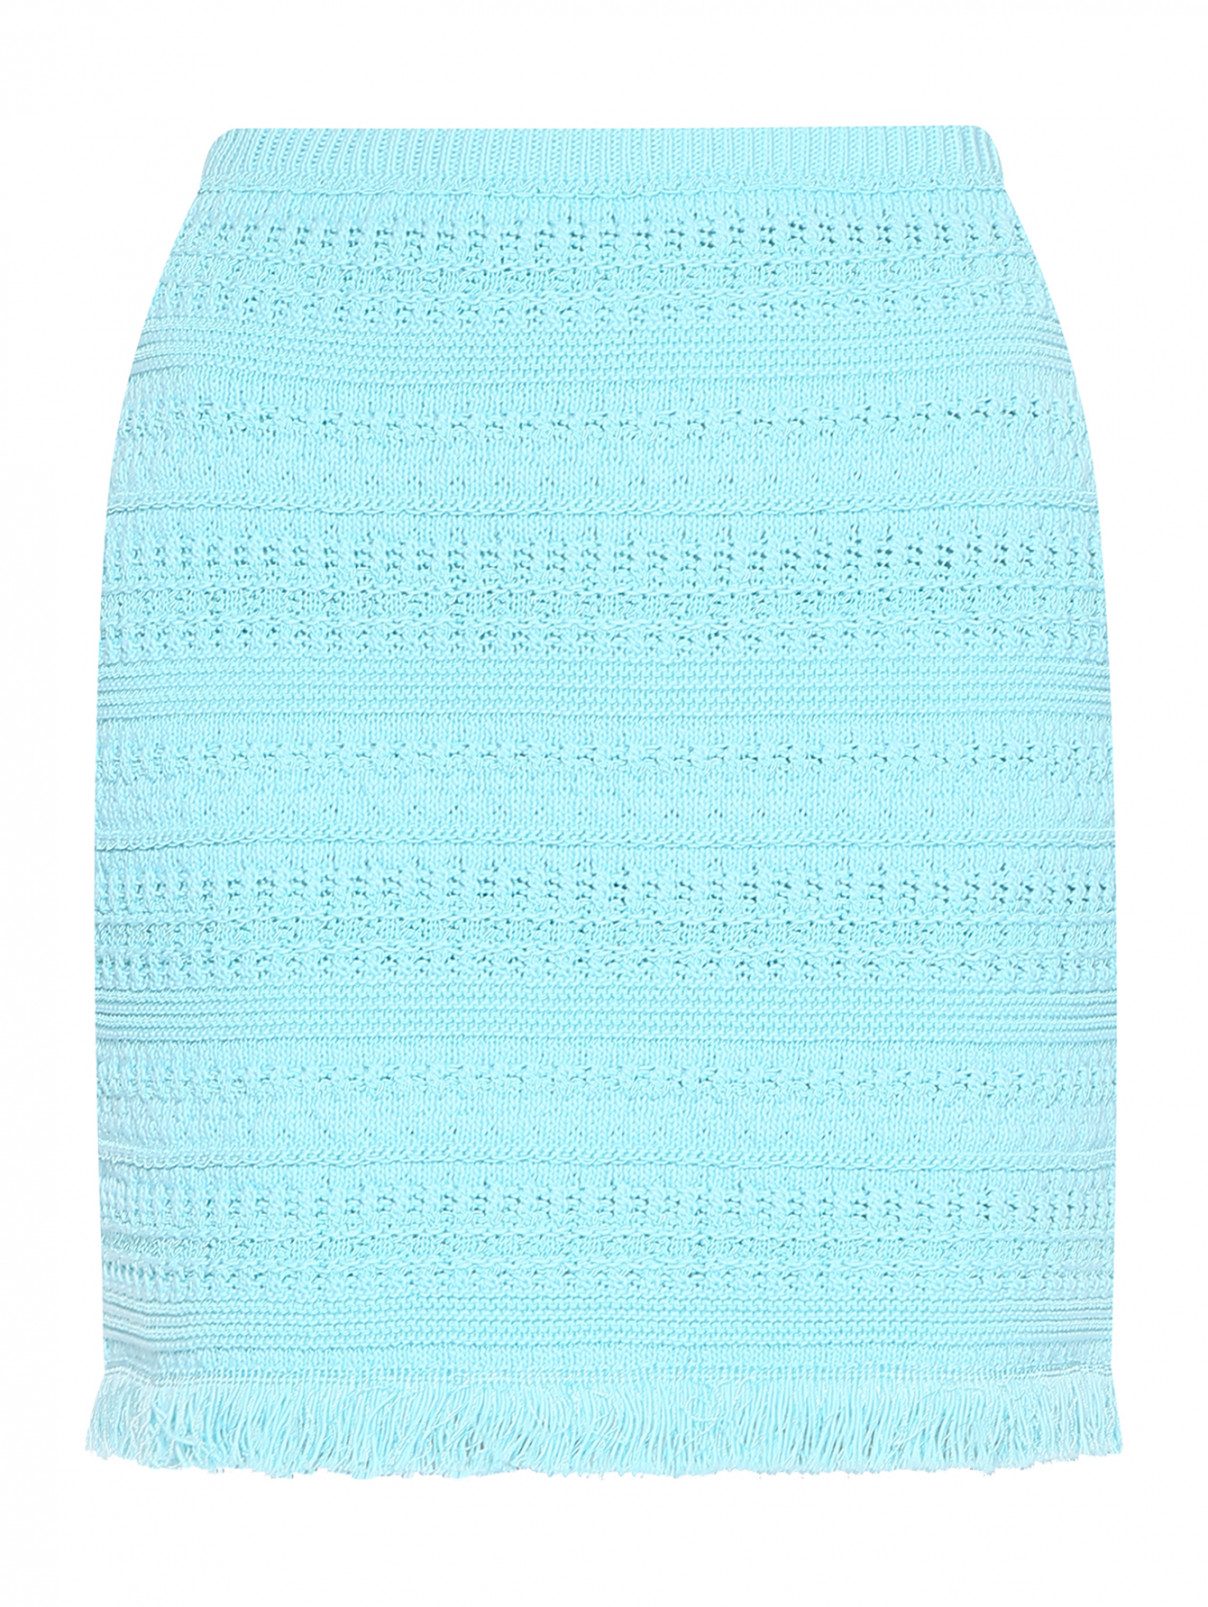 Трикотажная юбка с бахромой Luisa Spagnoli  –  Общий вид  – Цвет:  Синий